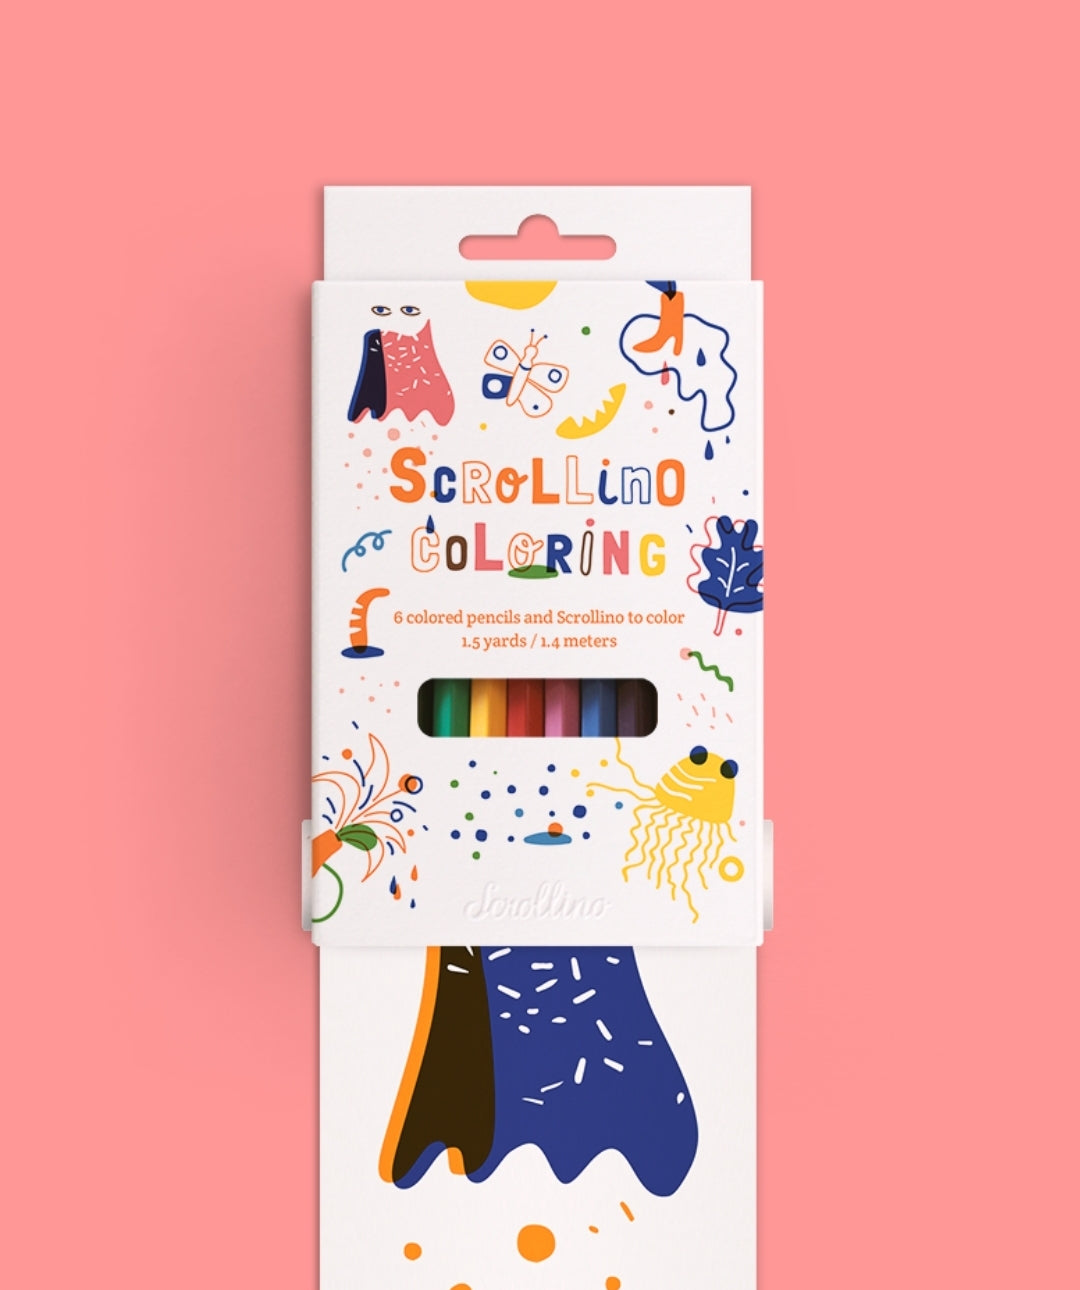 Scrollino Coloring Pack